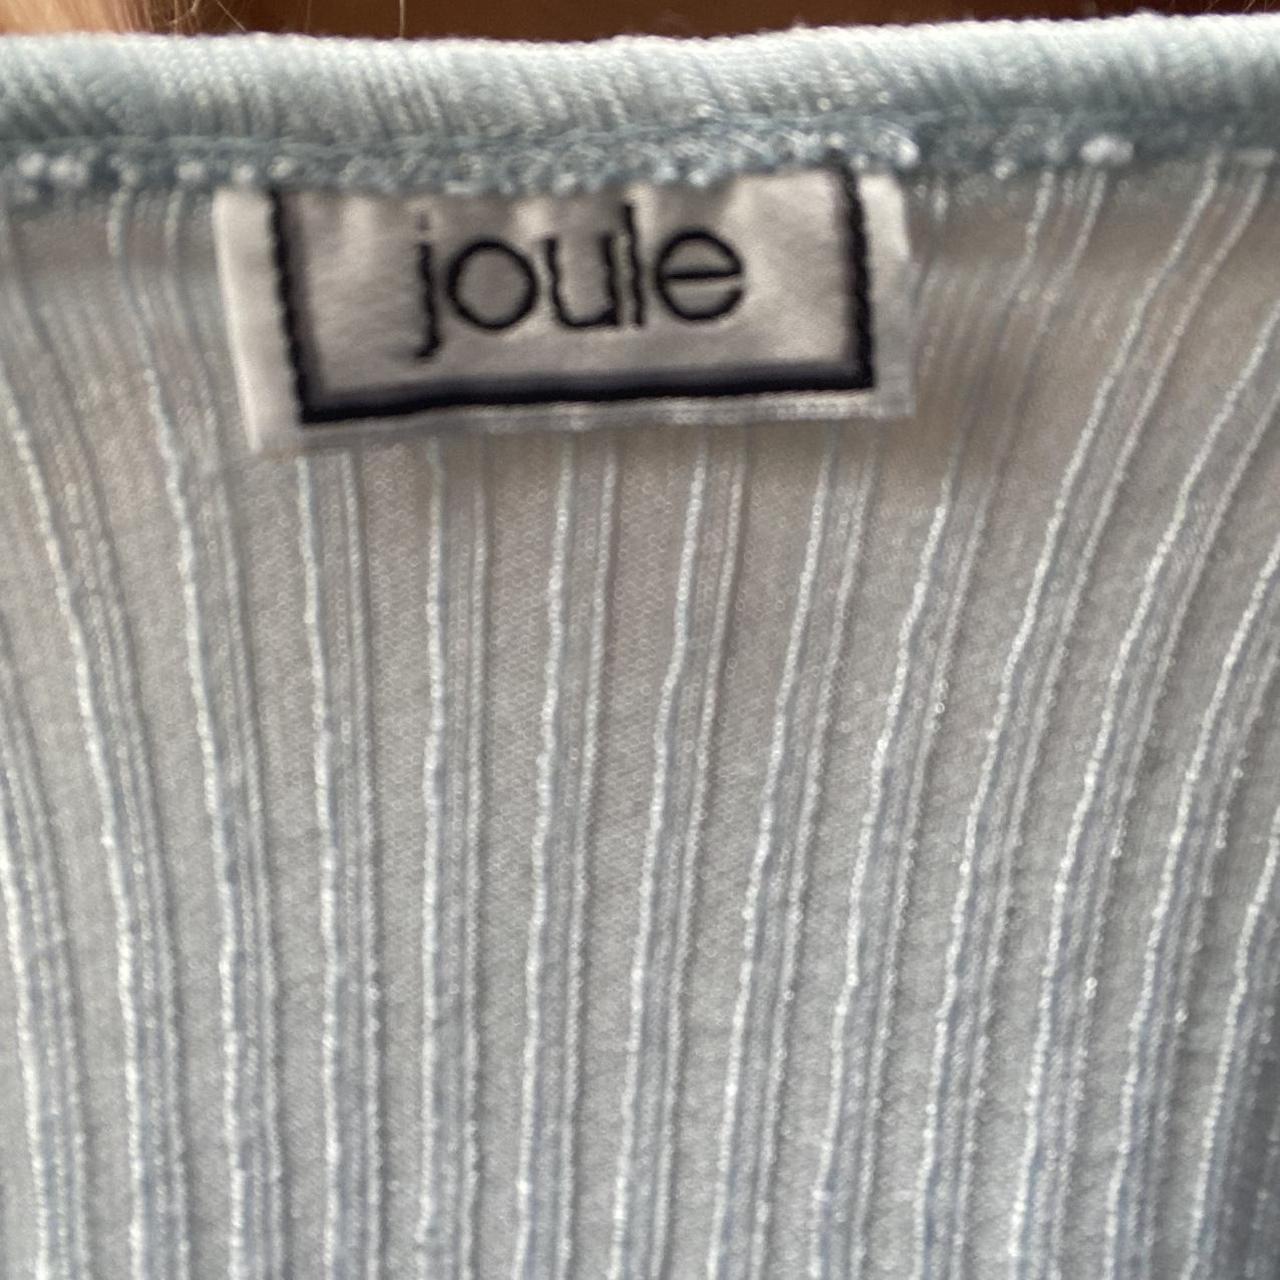 Joules Women's Blue Top (5)